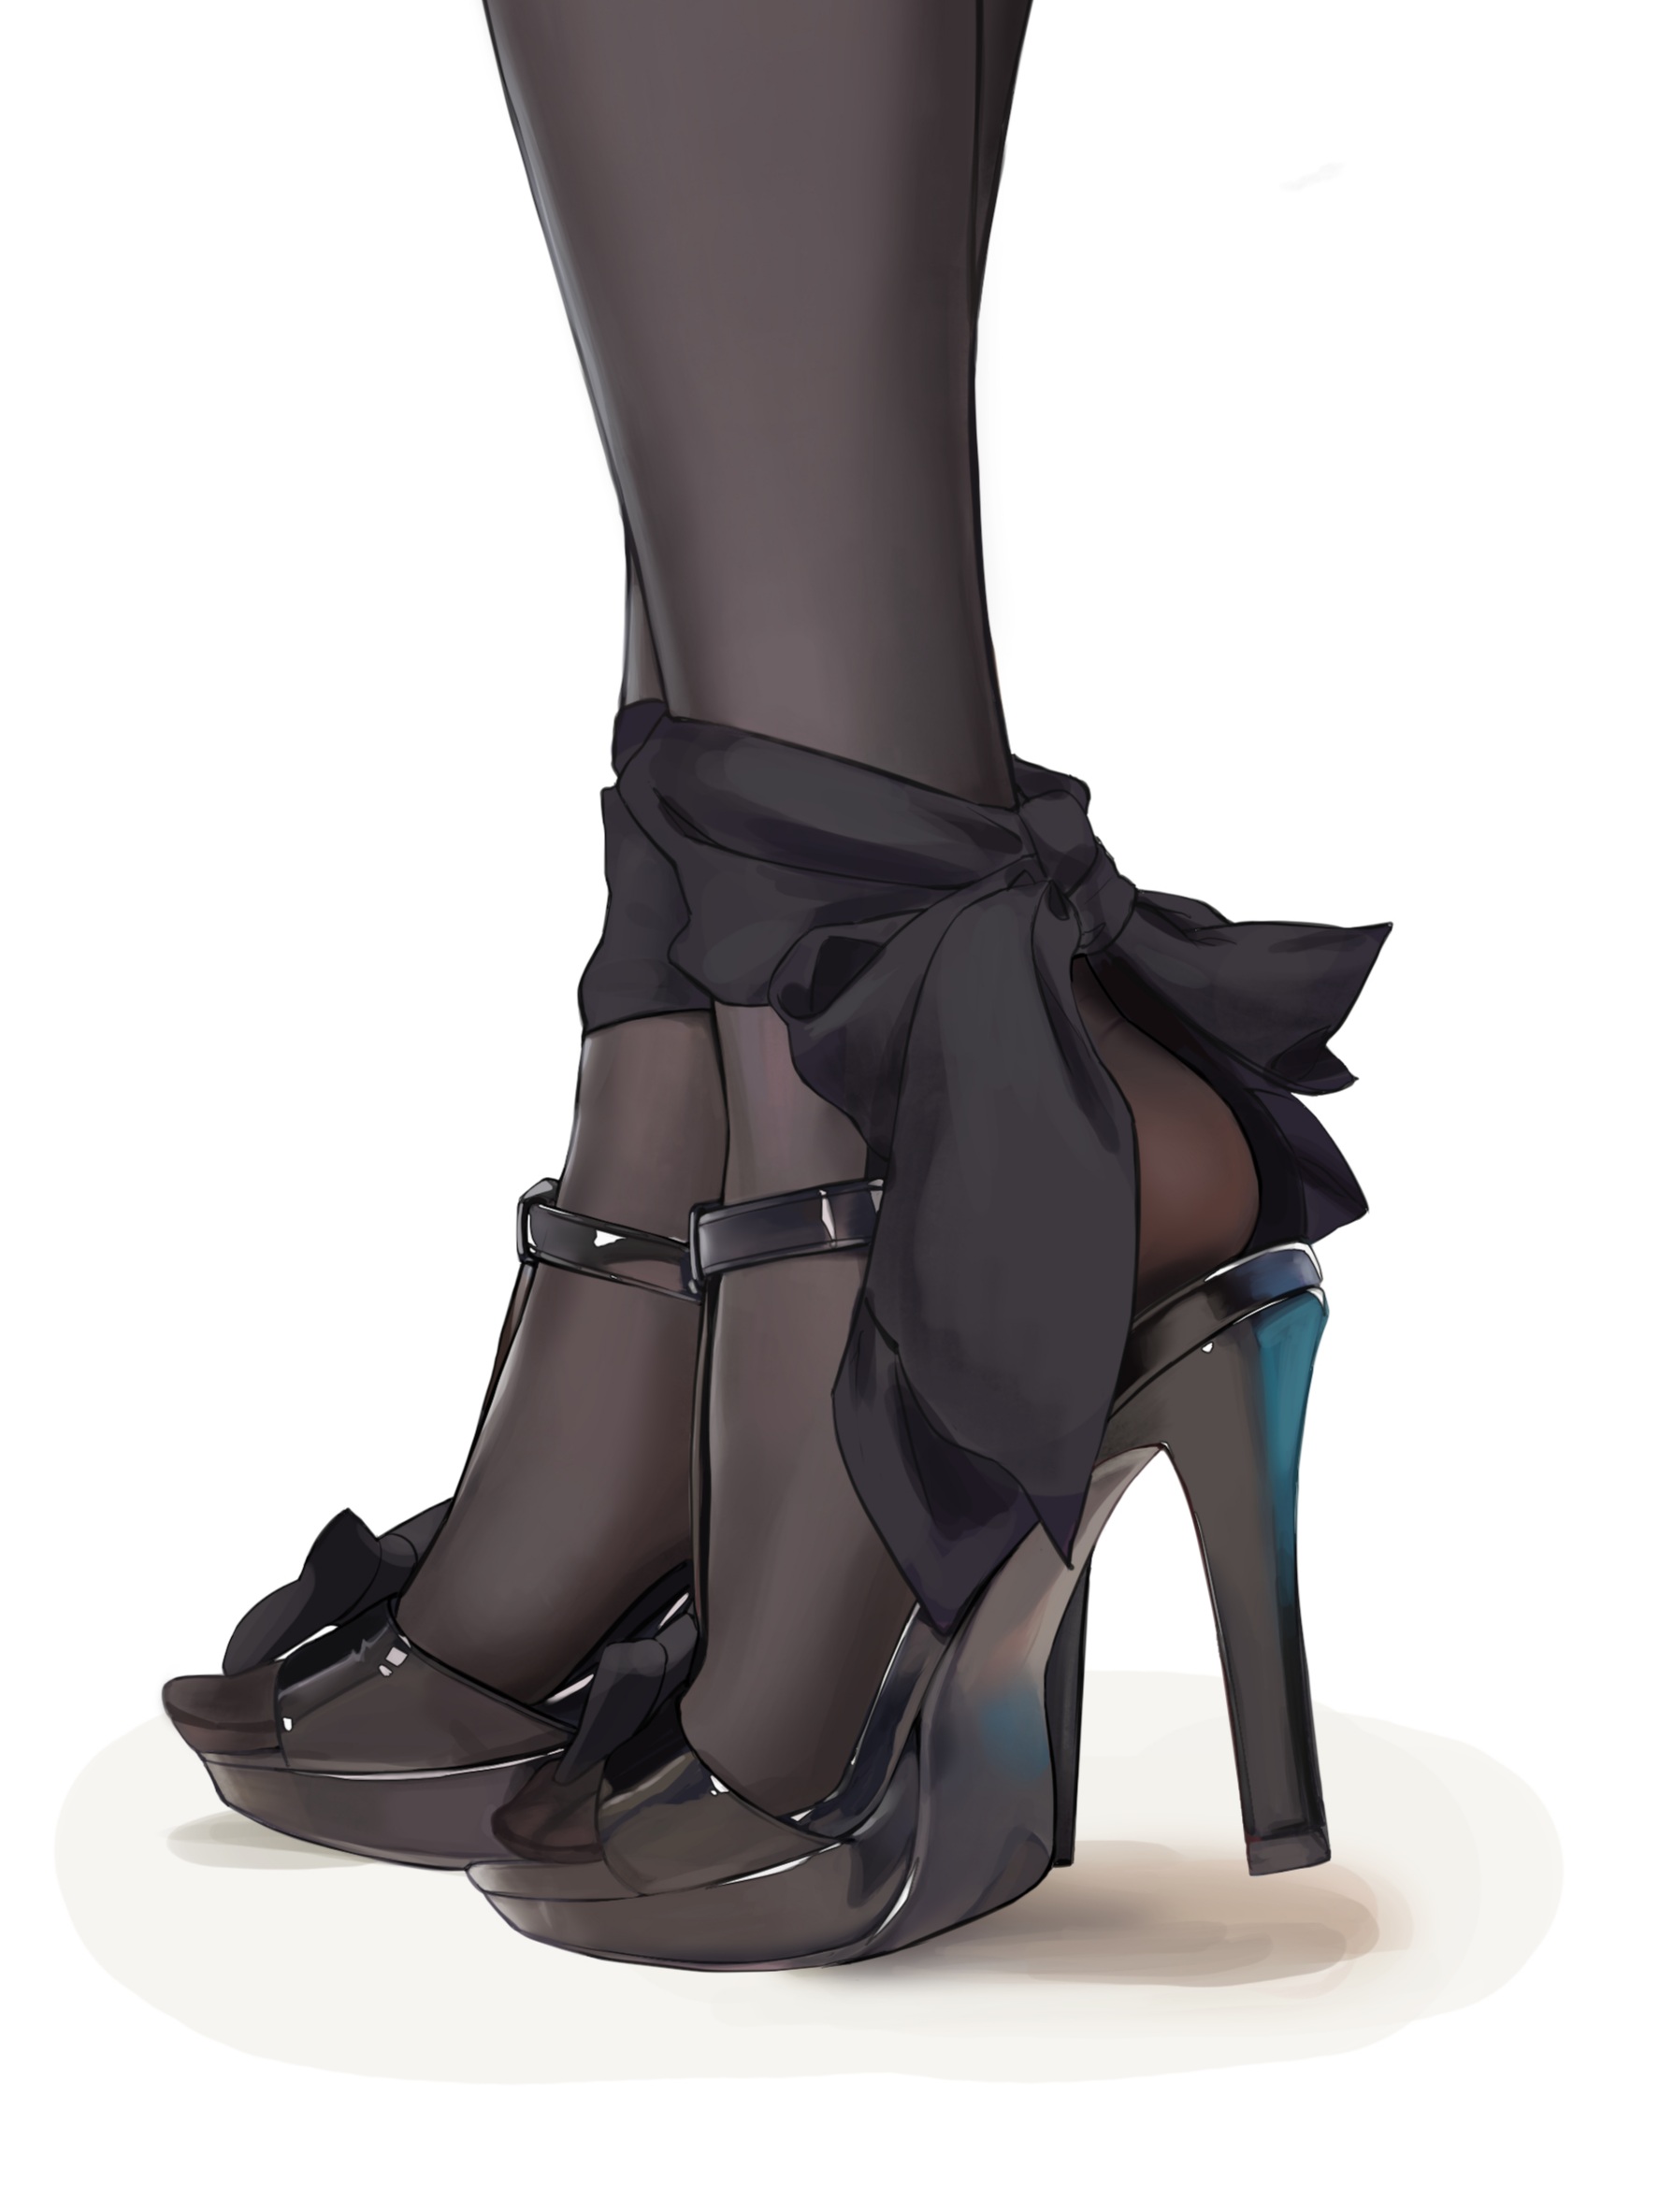 alejandro ferrari recommends anime girl high heels pic